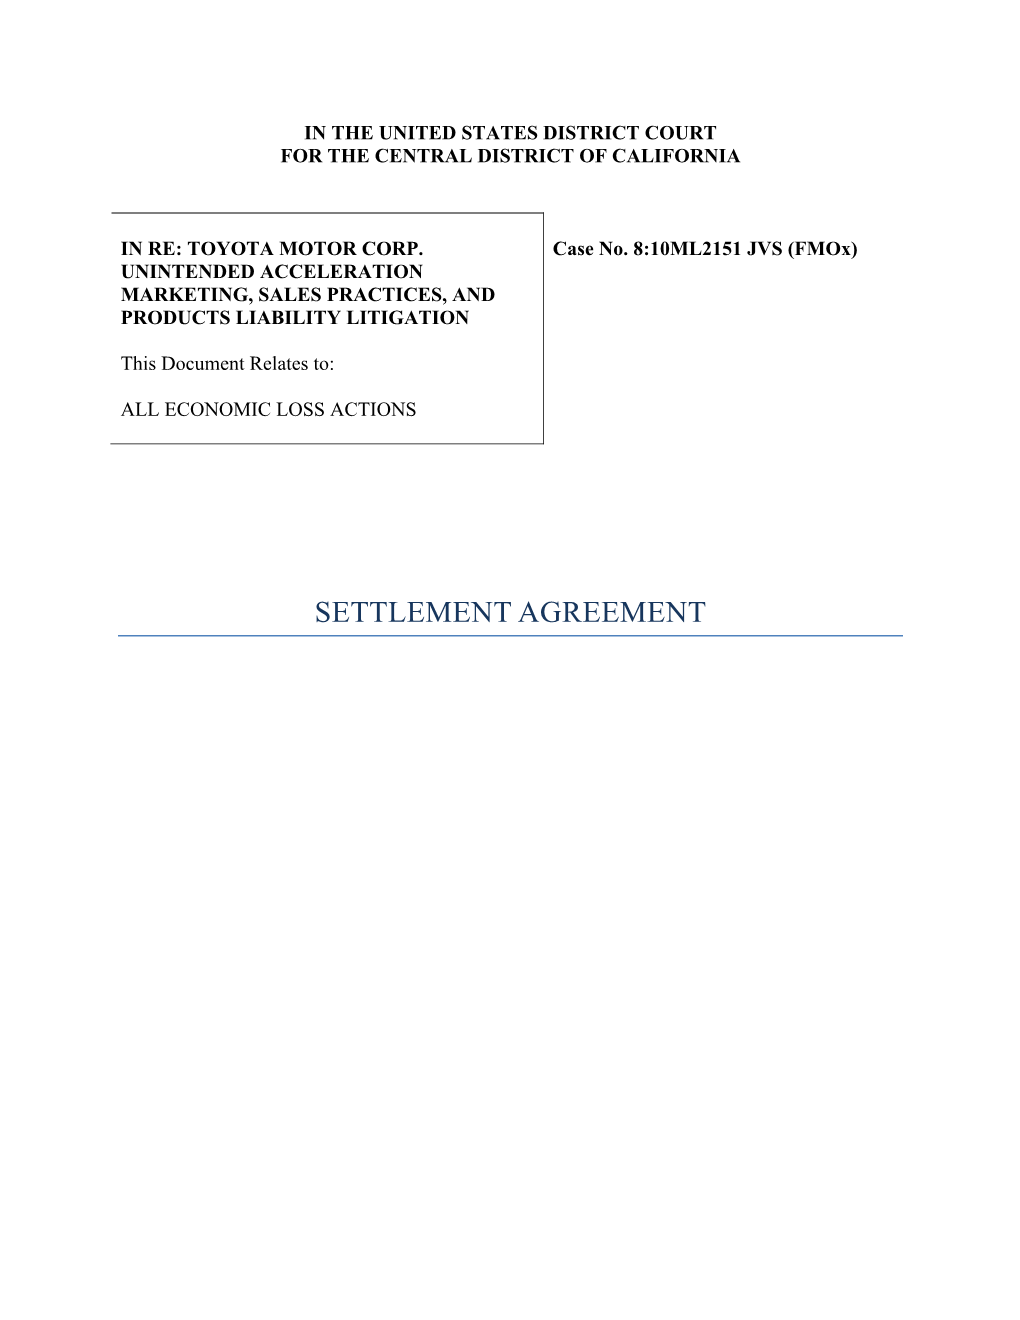 Toyota No. 2151 Settlement Agreement.Pdf